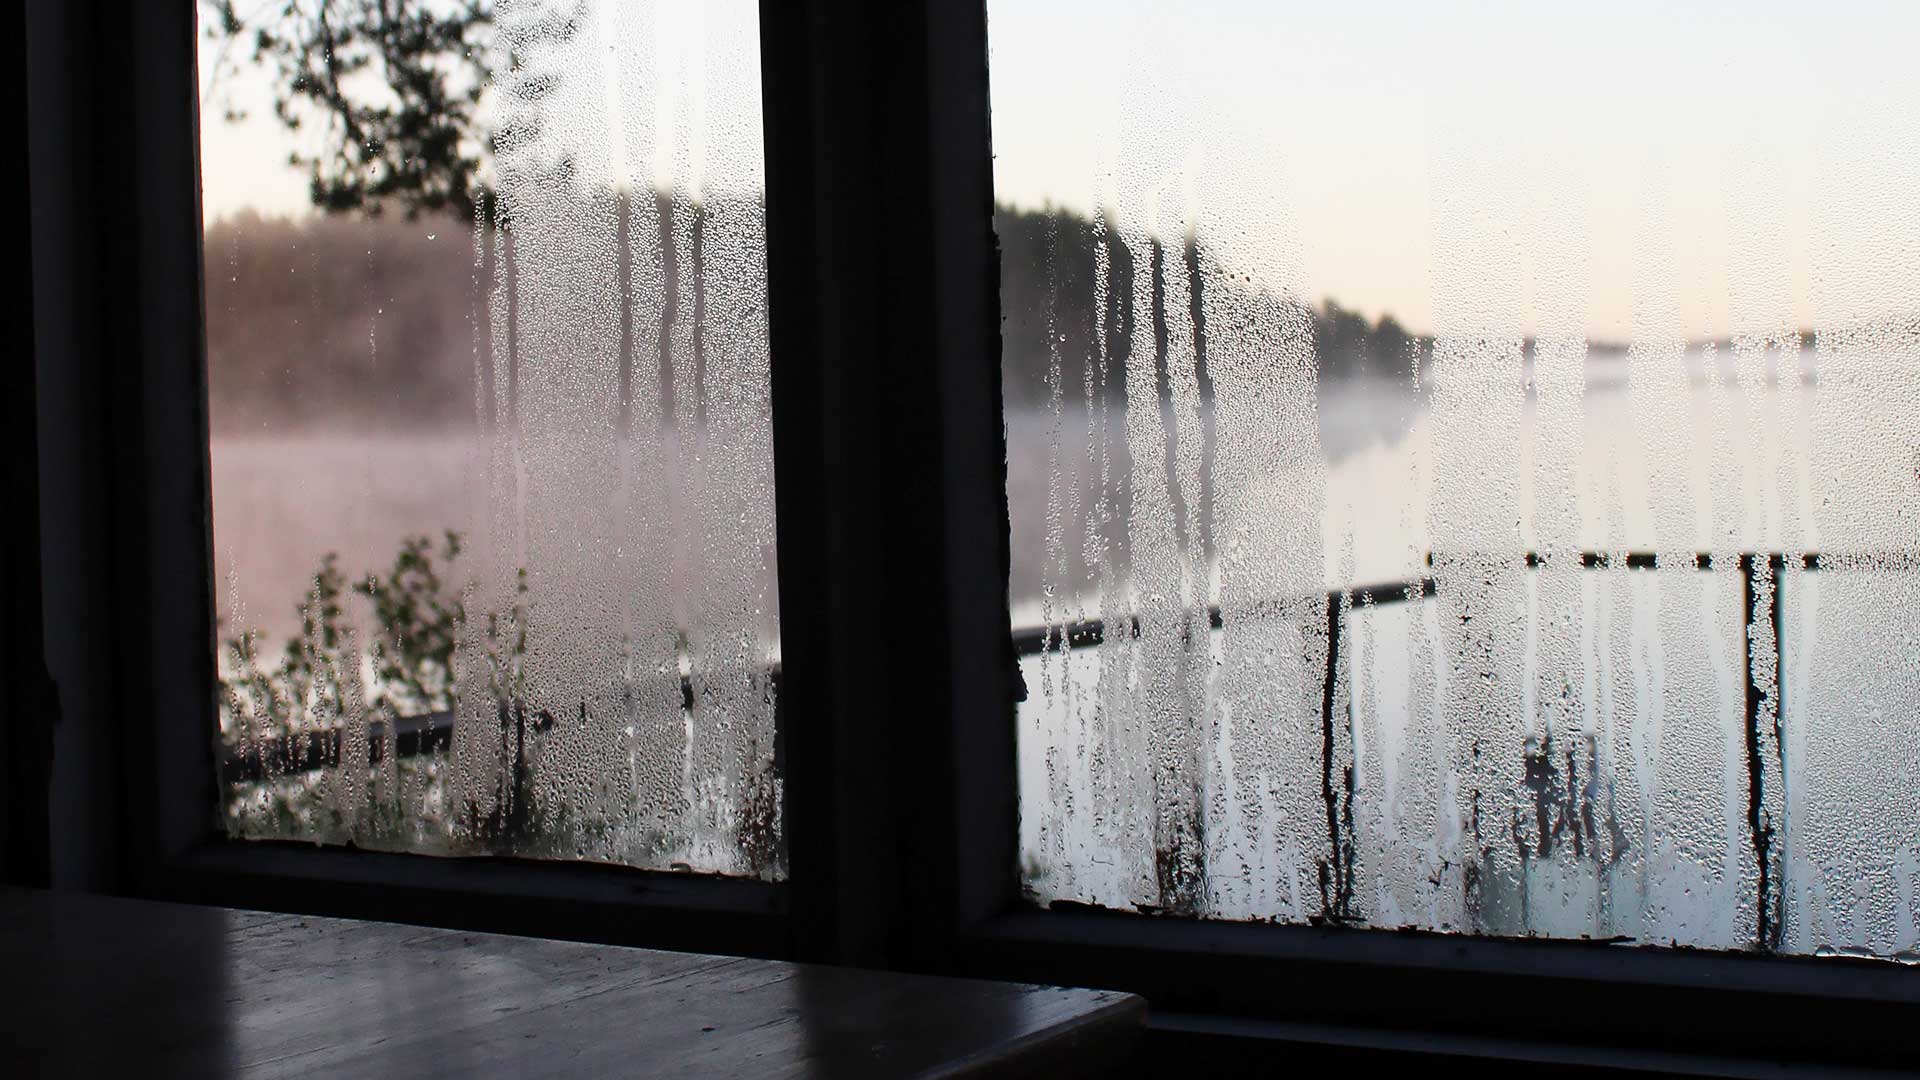 Beautiful condensation